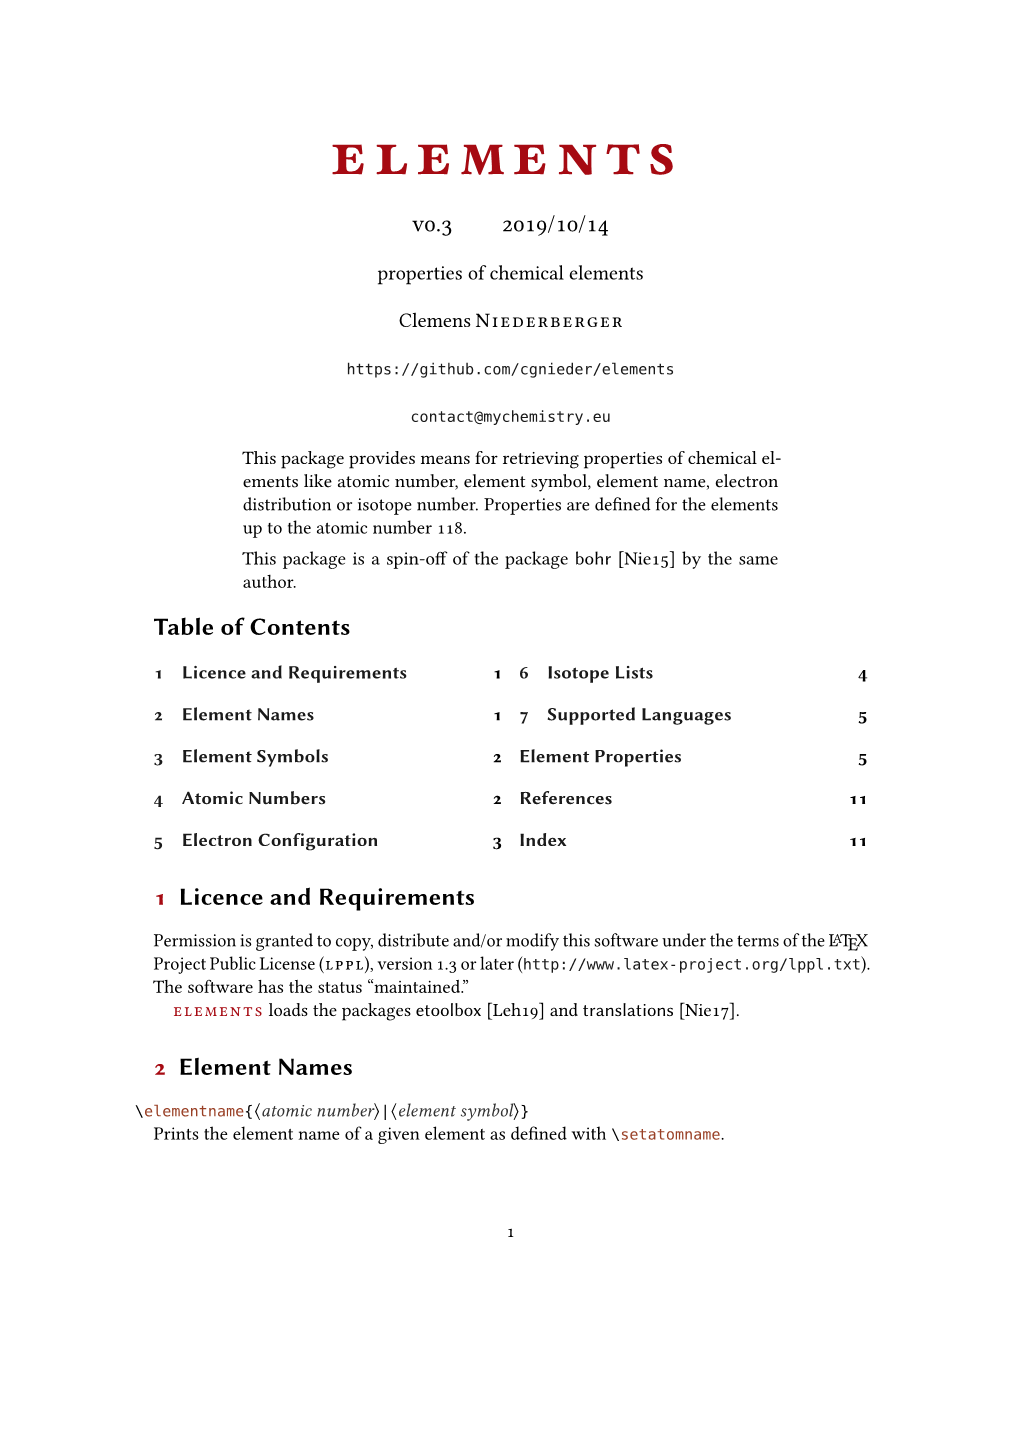 Elements V0.3 Manual